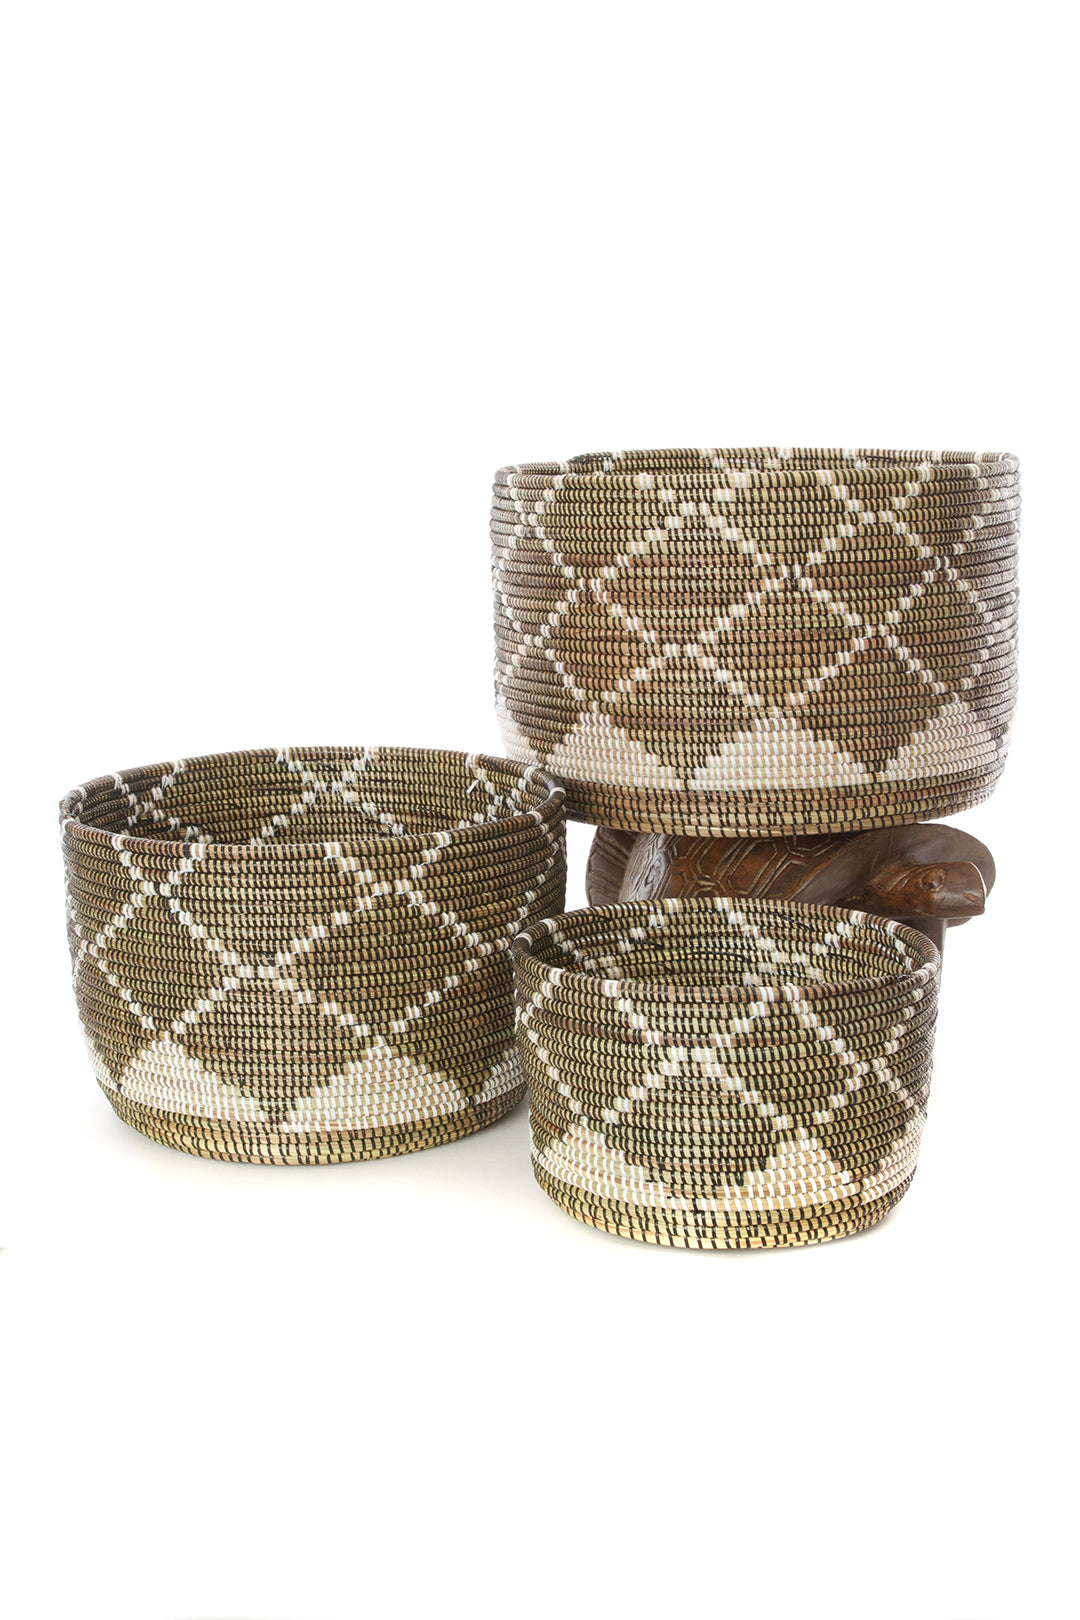 Set of Three Criss Cross Nesting Baskets